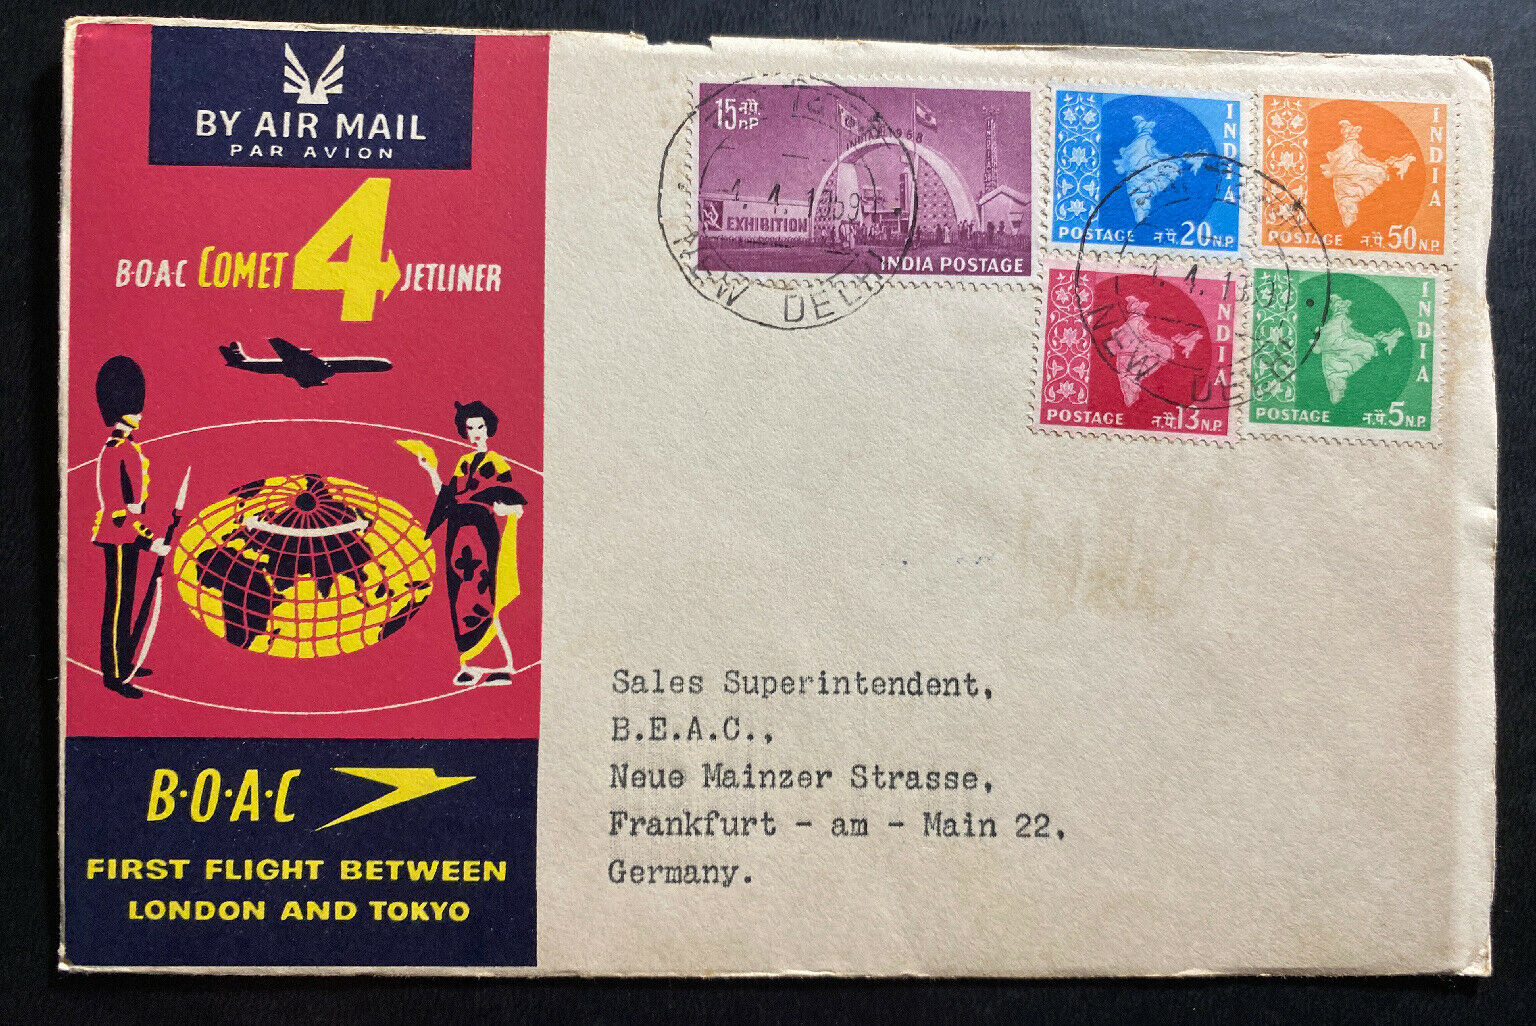 1959 New Delhi India First Flight Airmail Cover Ffc To Frankfurt Germany Boac